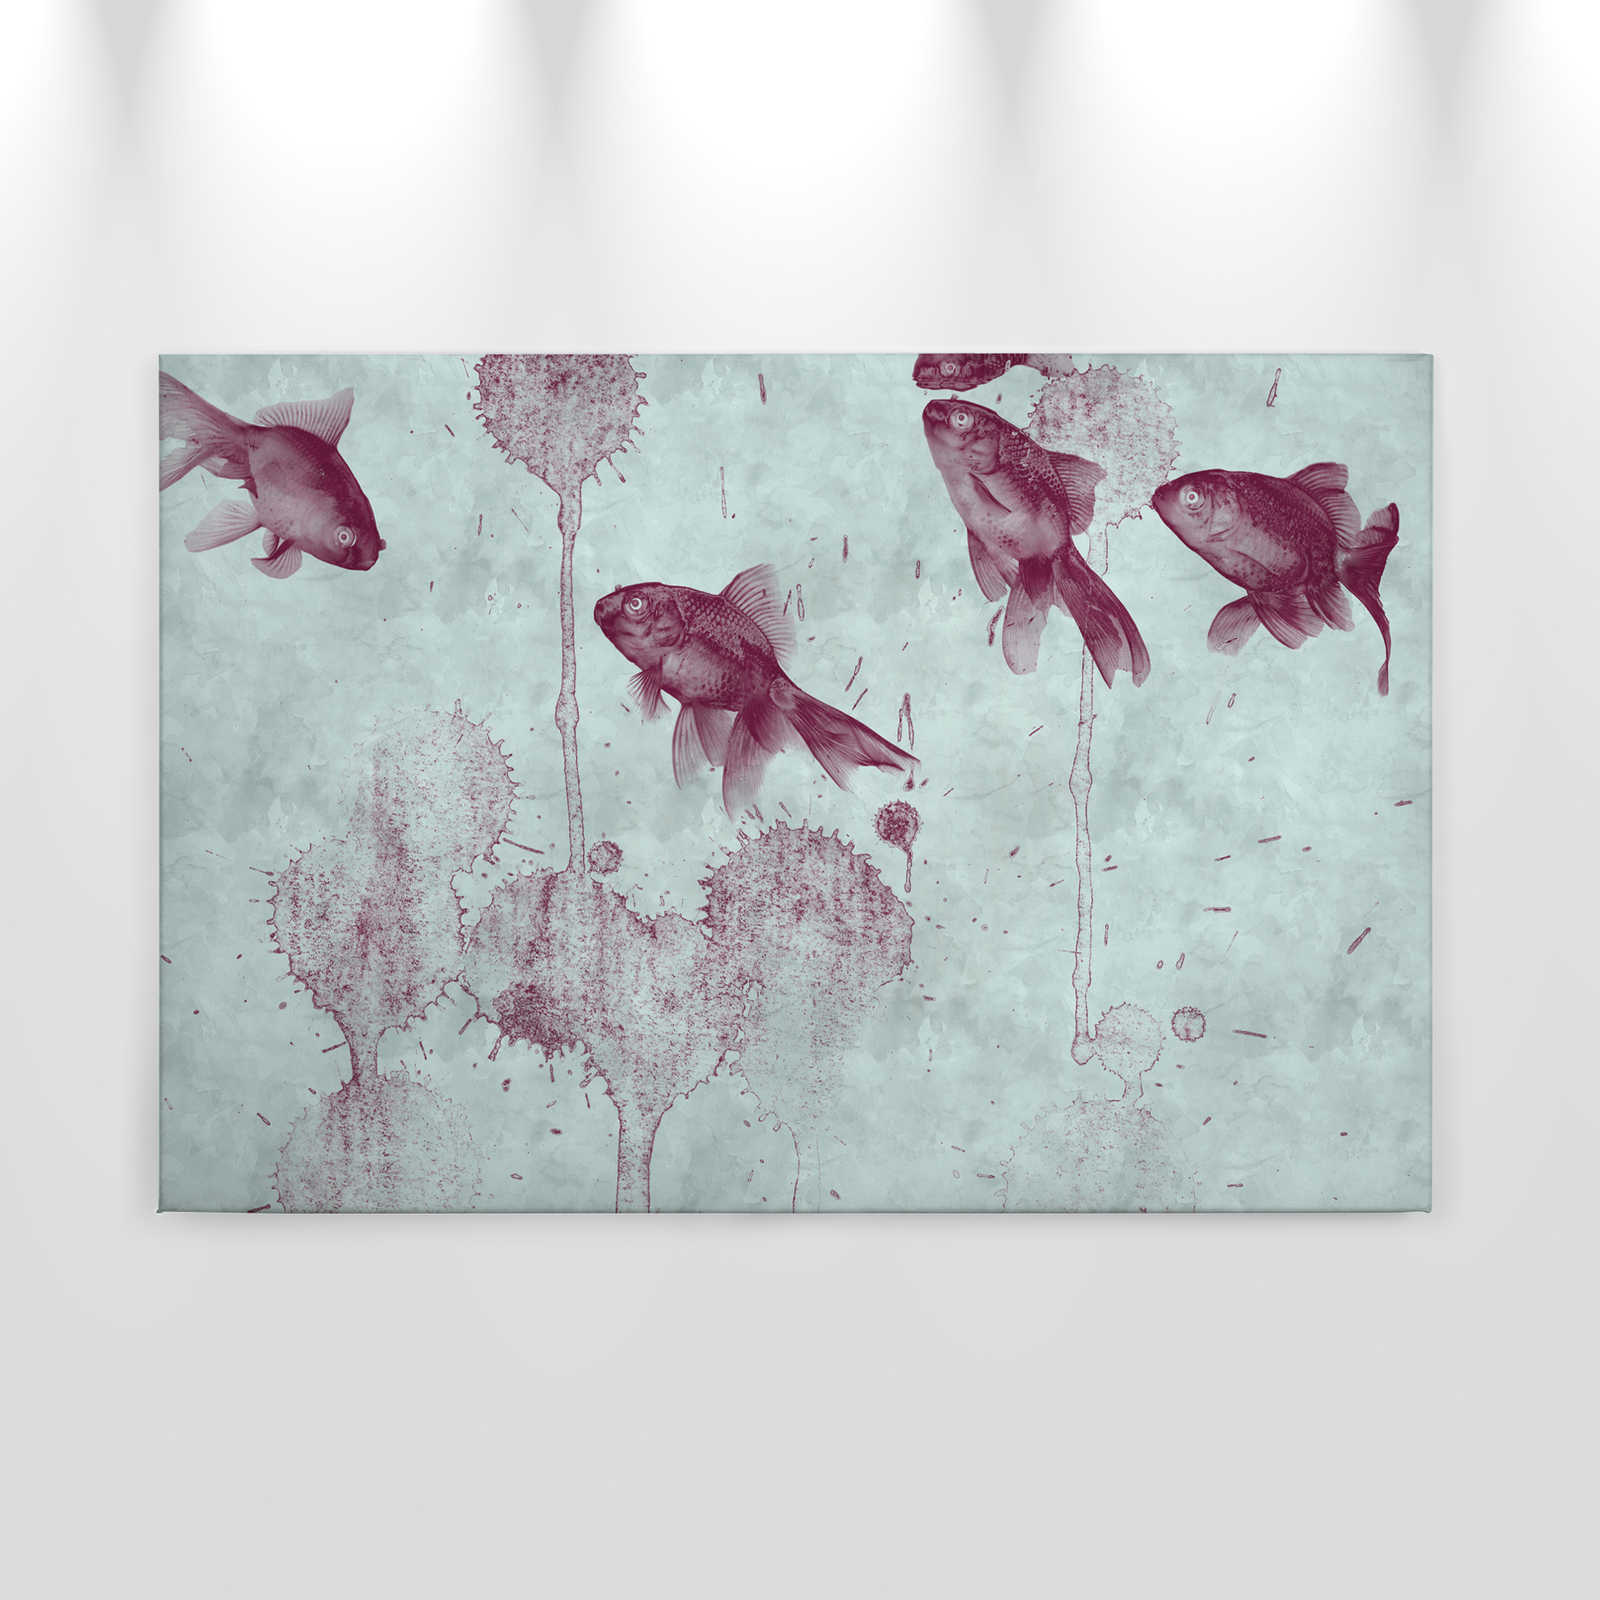             modernes Leinwandbild Fisch Design im Aquarell Stil – 0,90 m x 0,60 m
        